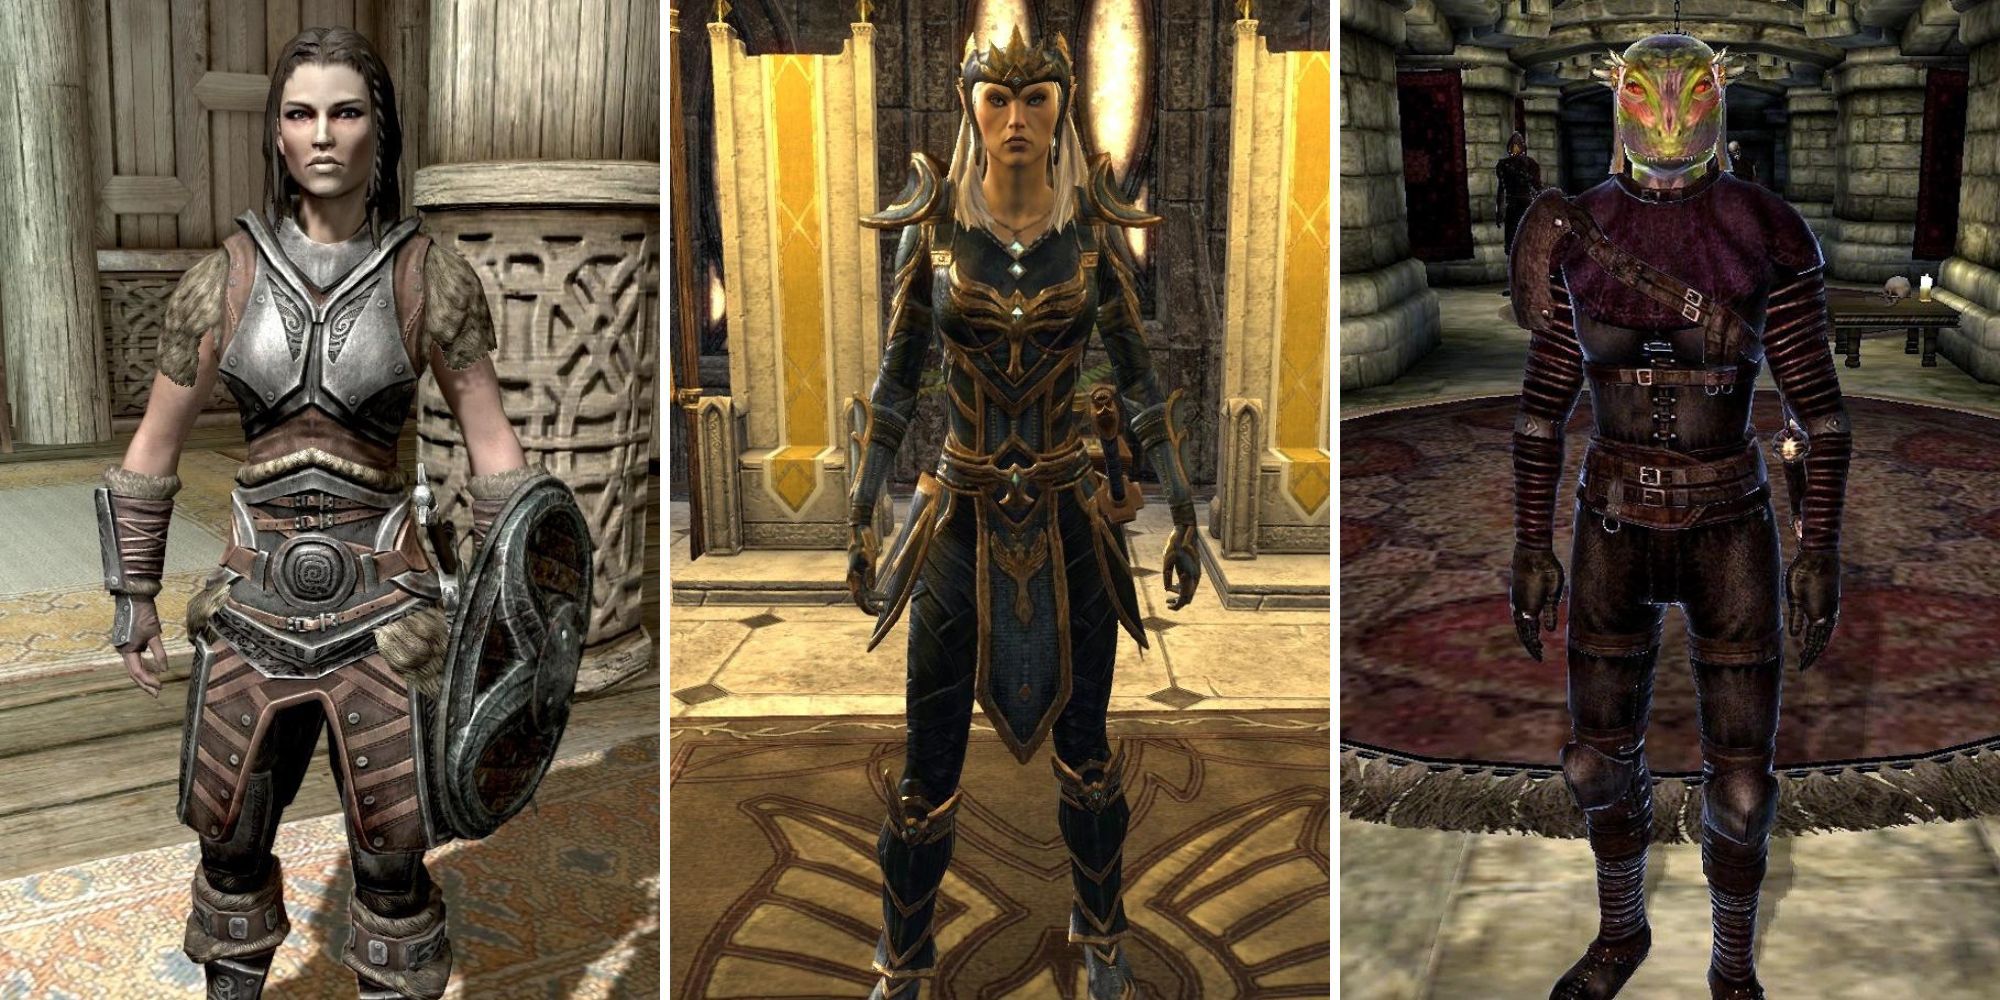 A grid of images showing three different women from the games Elder Scrolls 5: Skyrim, Elder Scrolls Online, and Elder Scrolls 4: Oblivion